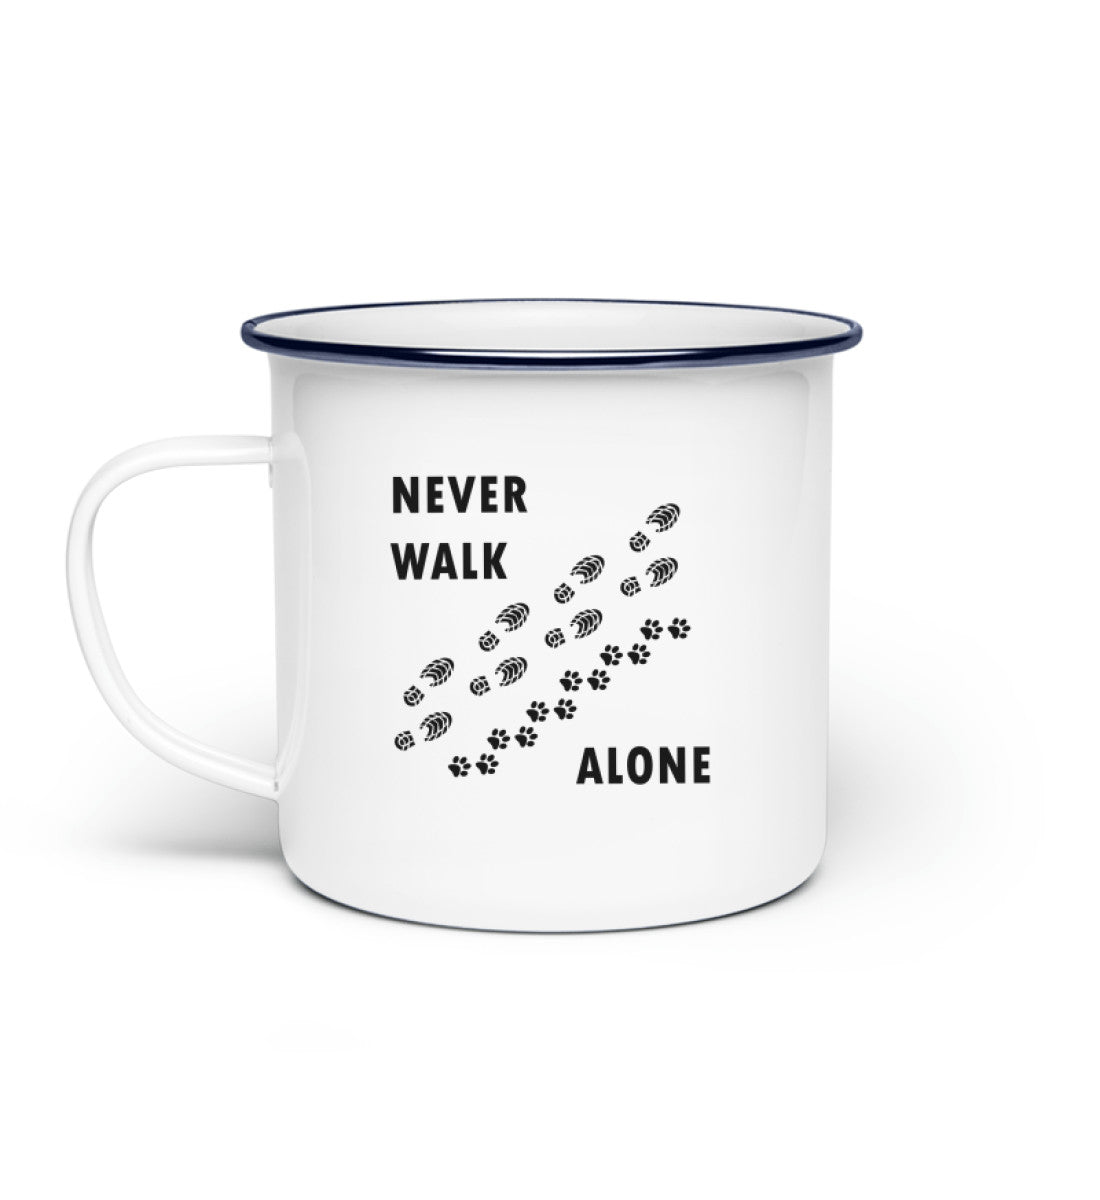 Never walk alone - Emaille Tasse wandern